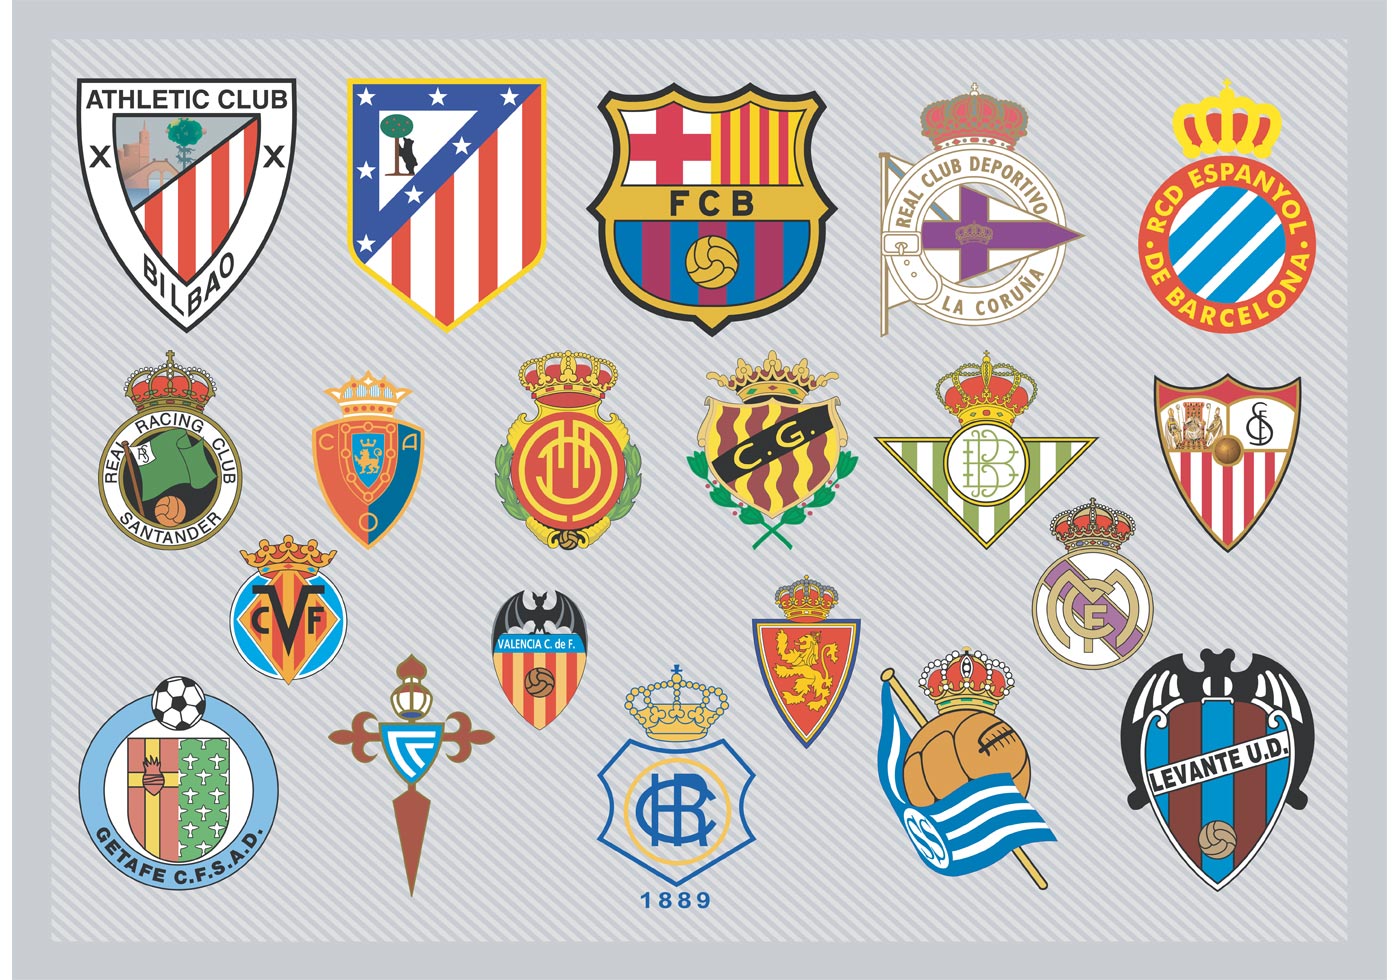 Champions league team logos! 